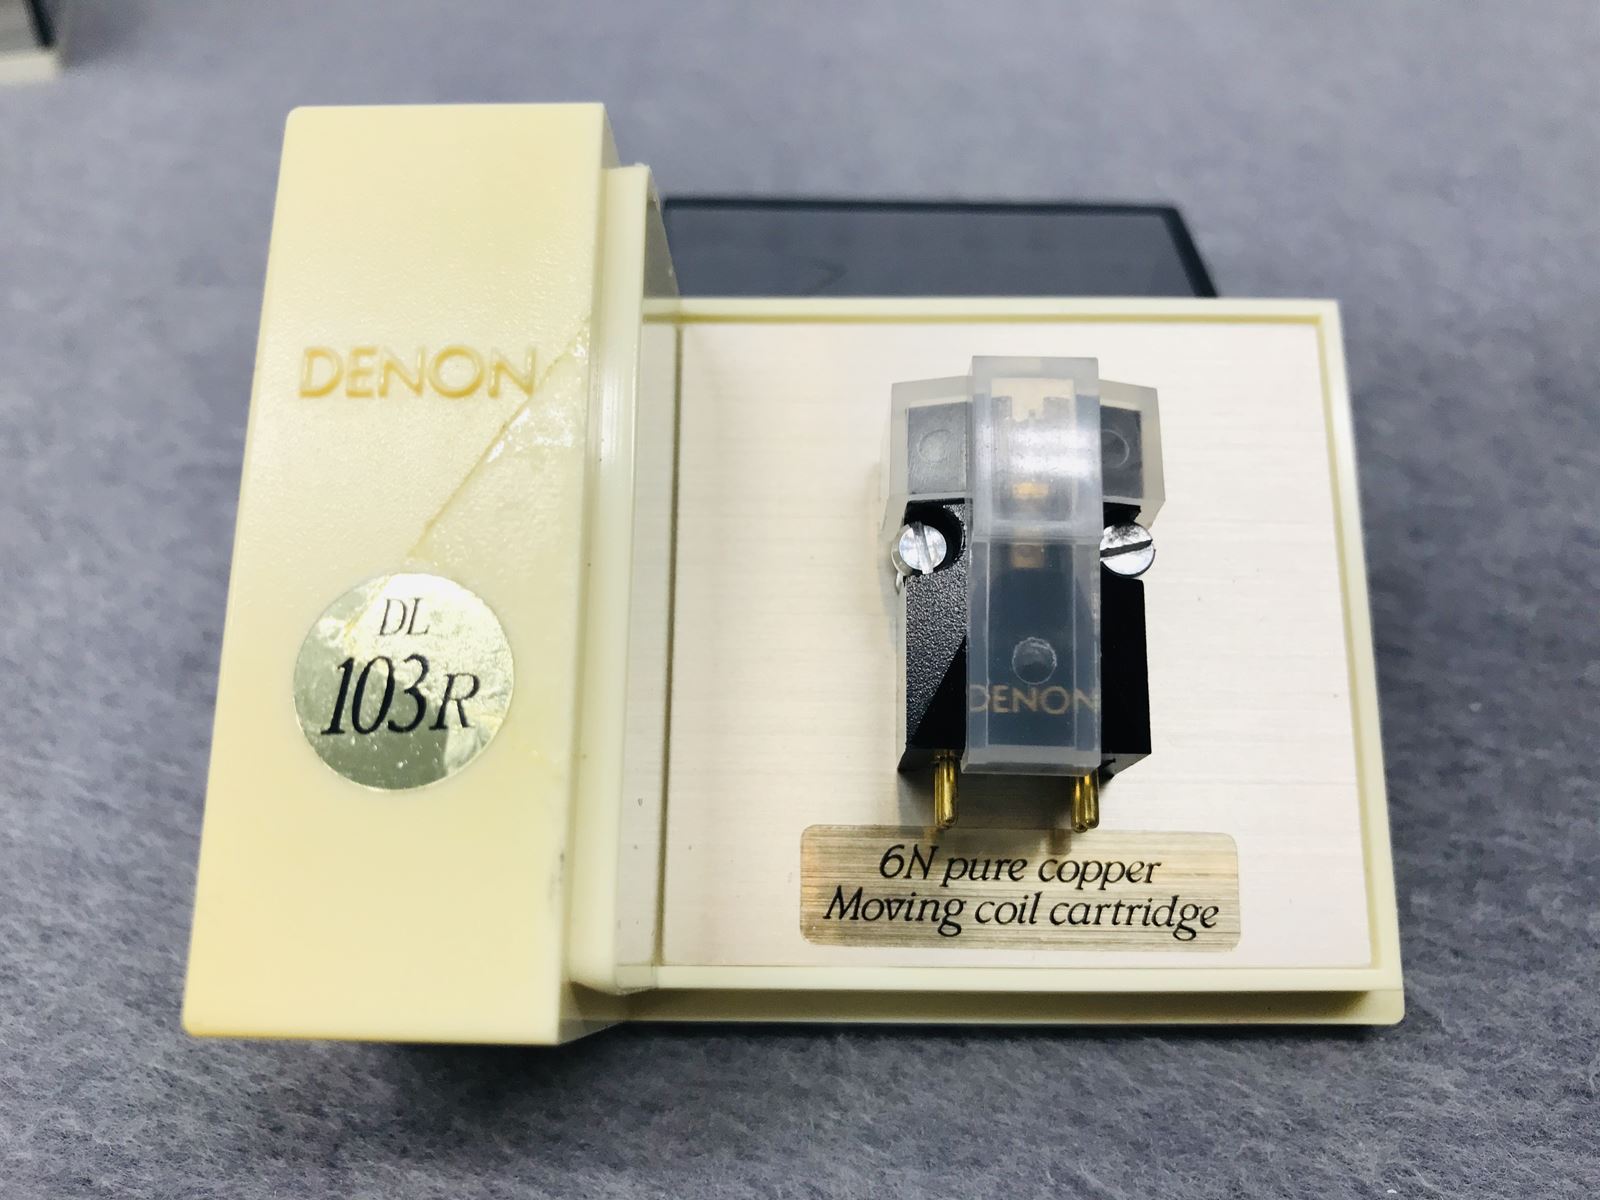 MCカートリッジ DENON DENON デノンDL-103R